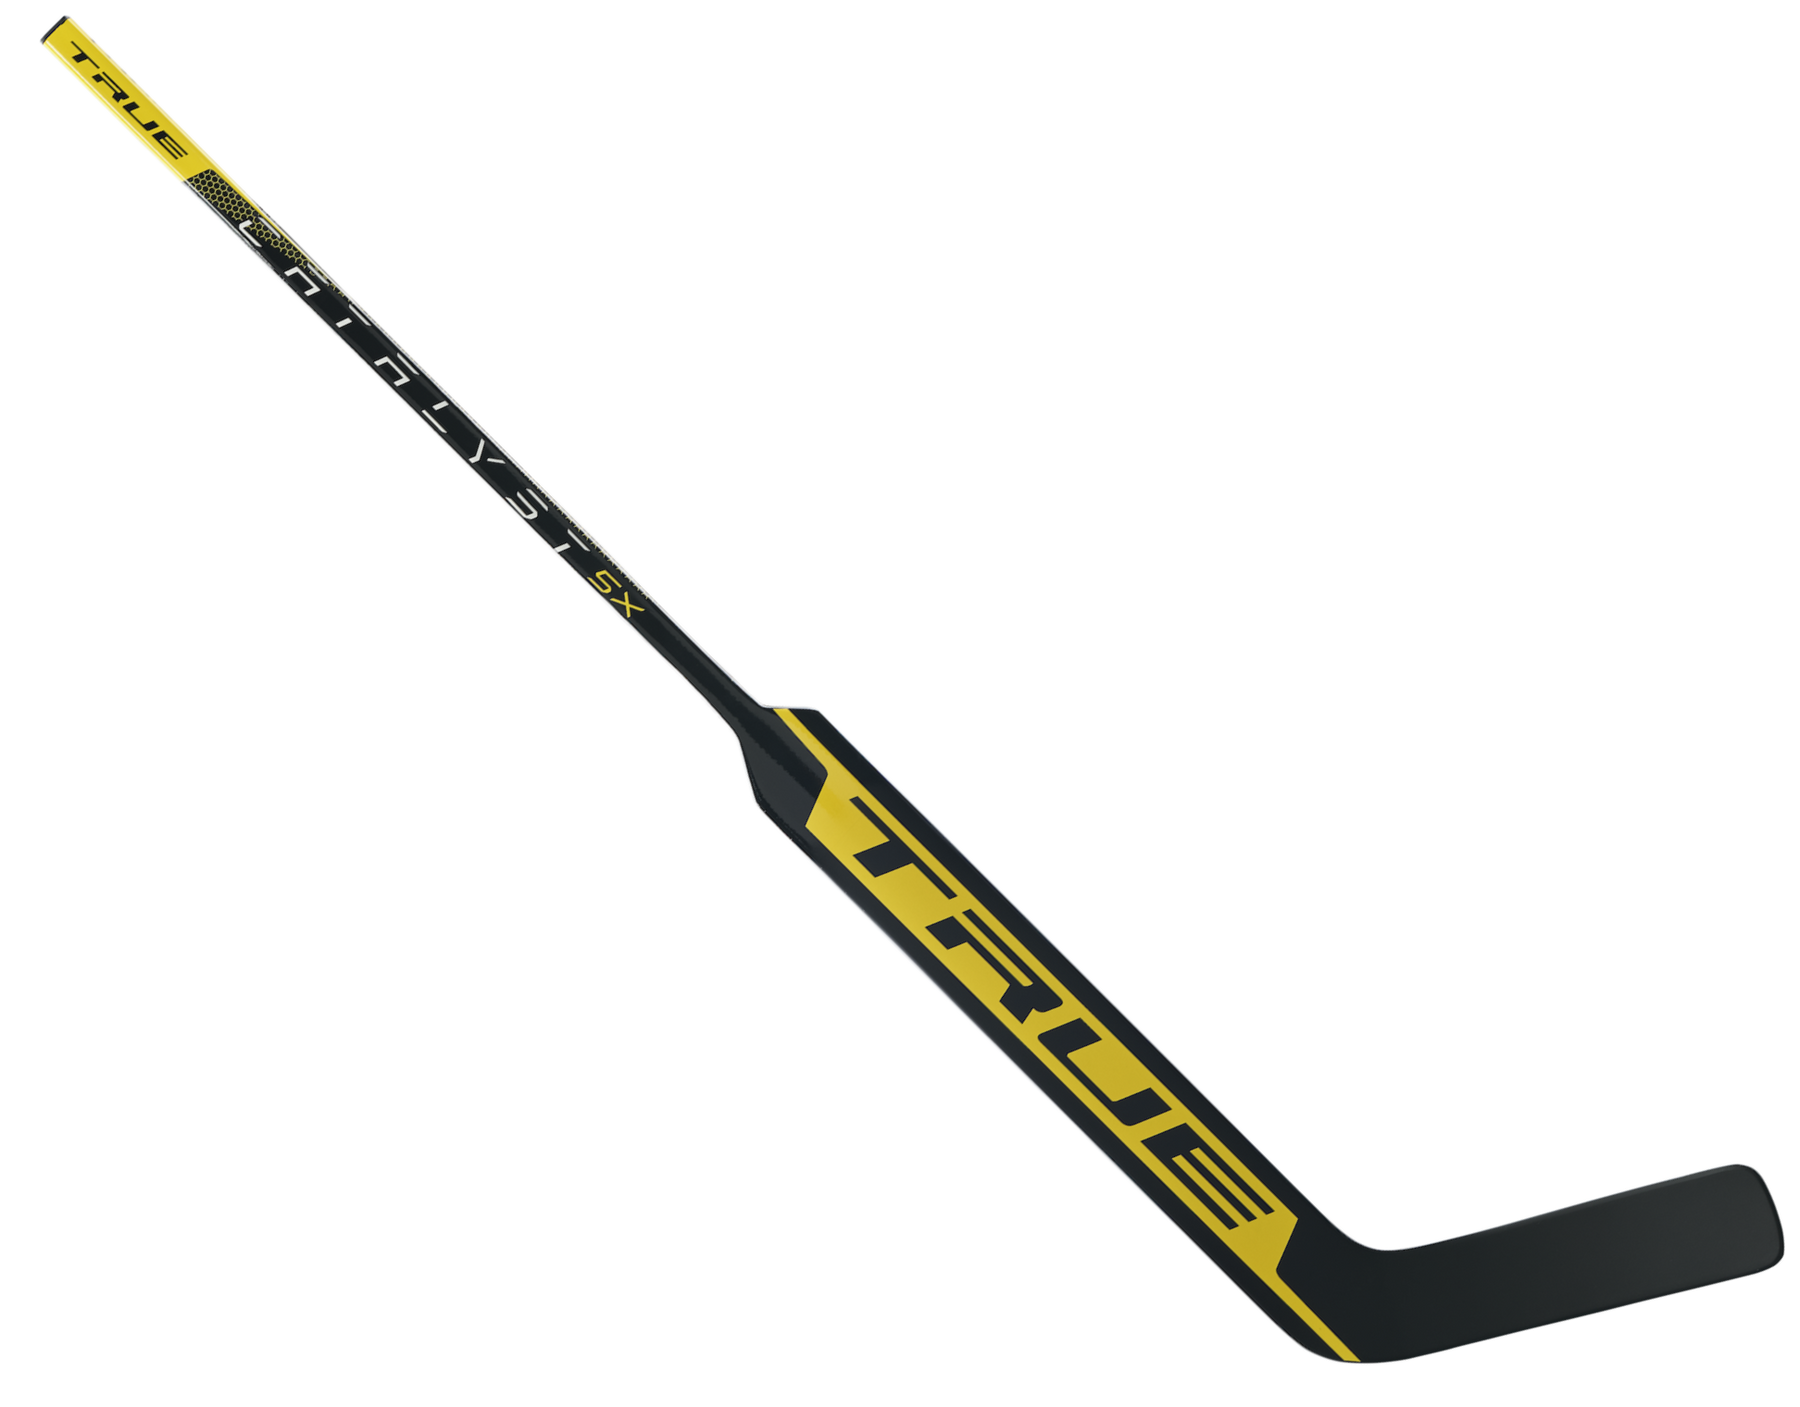 True Catalyst 5X Senior Goalie Stick (Black)